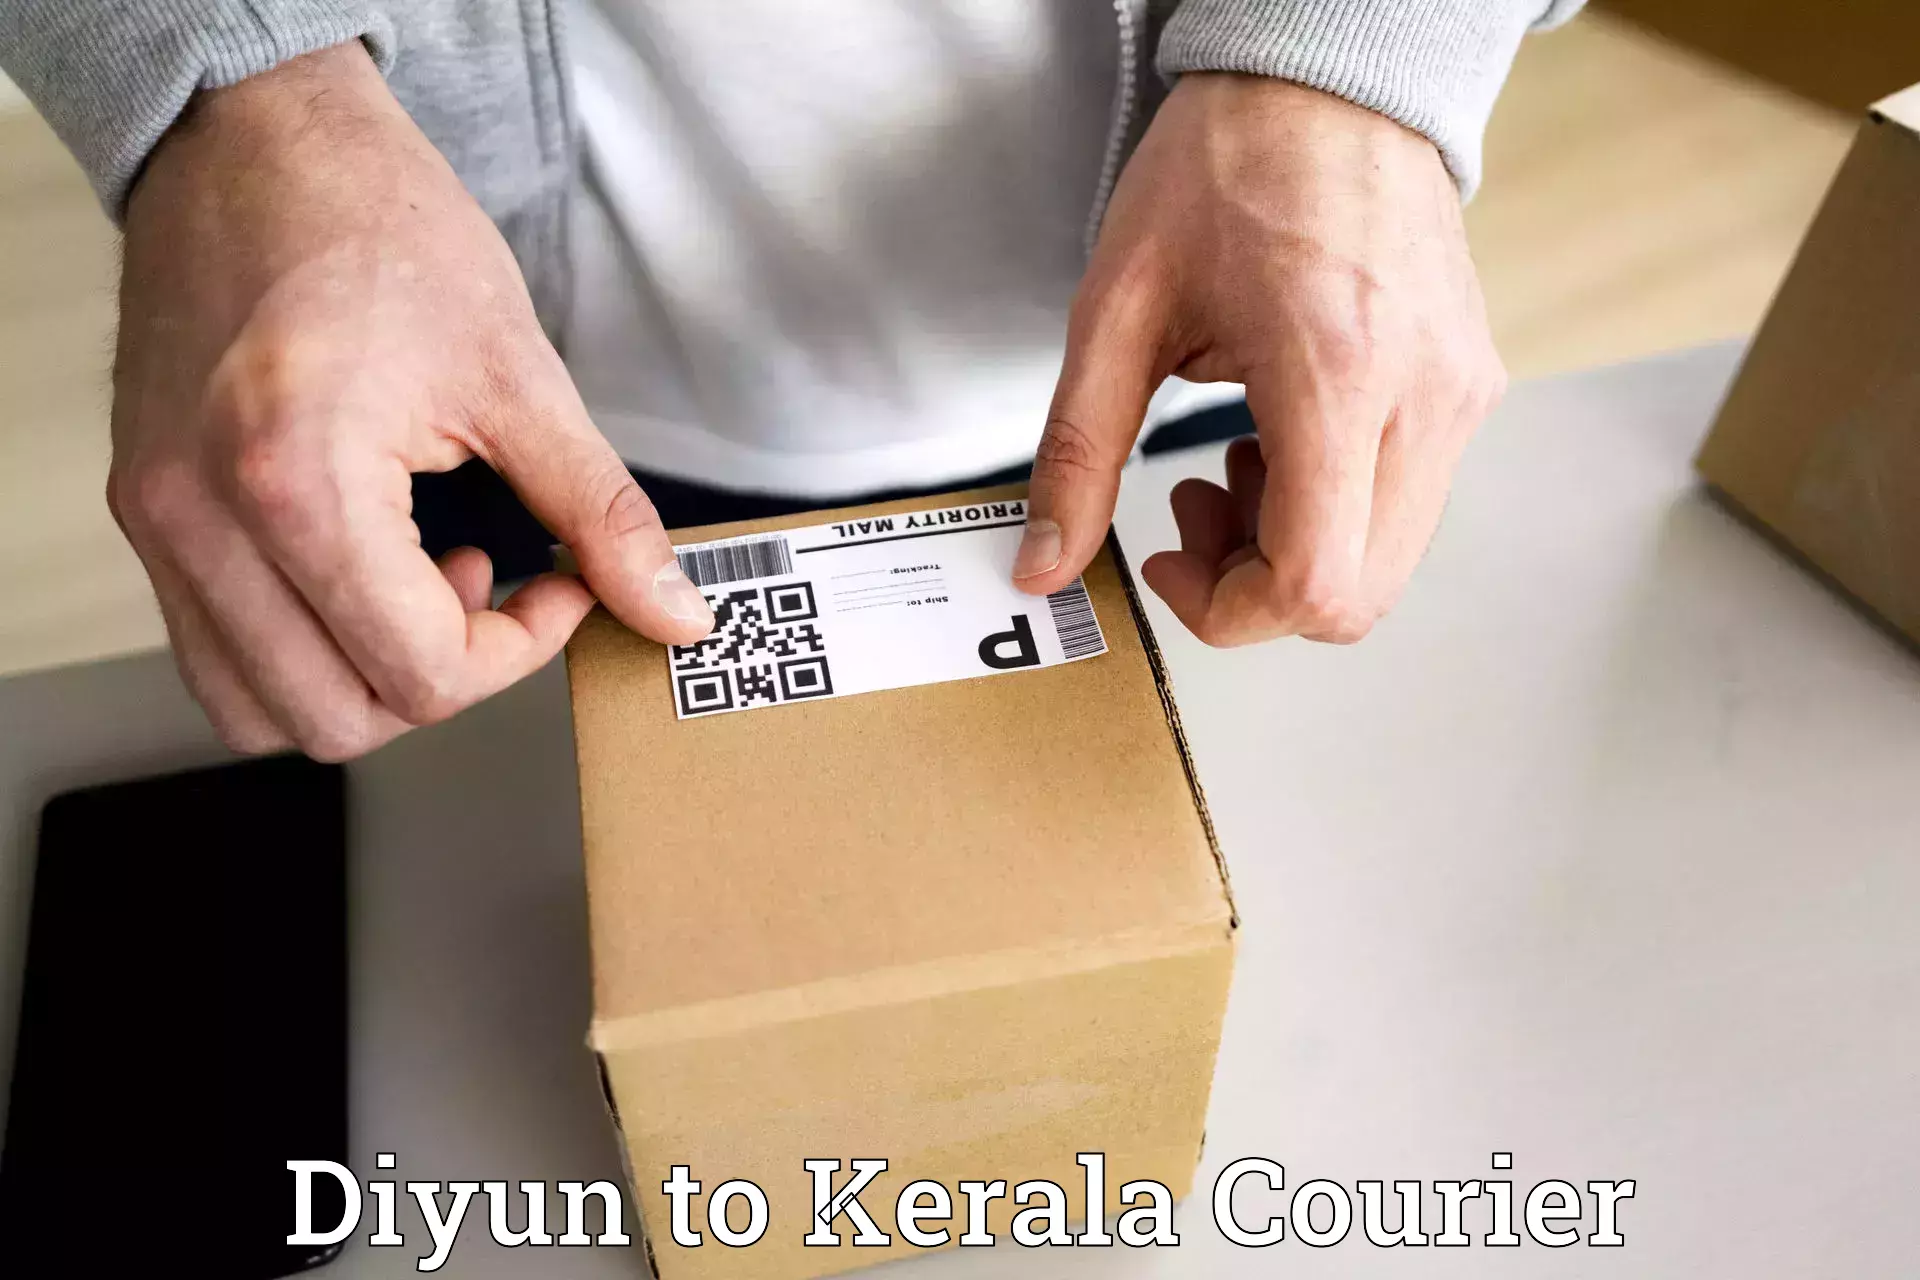 Shipping and handling in Diyun to Kerala